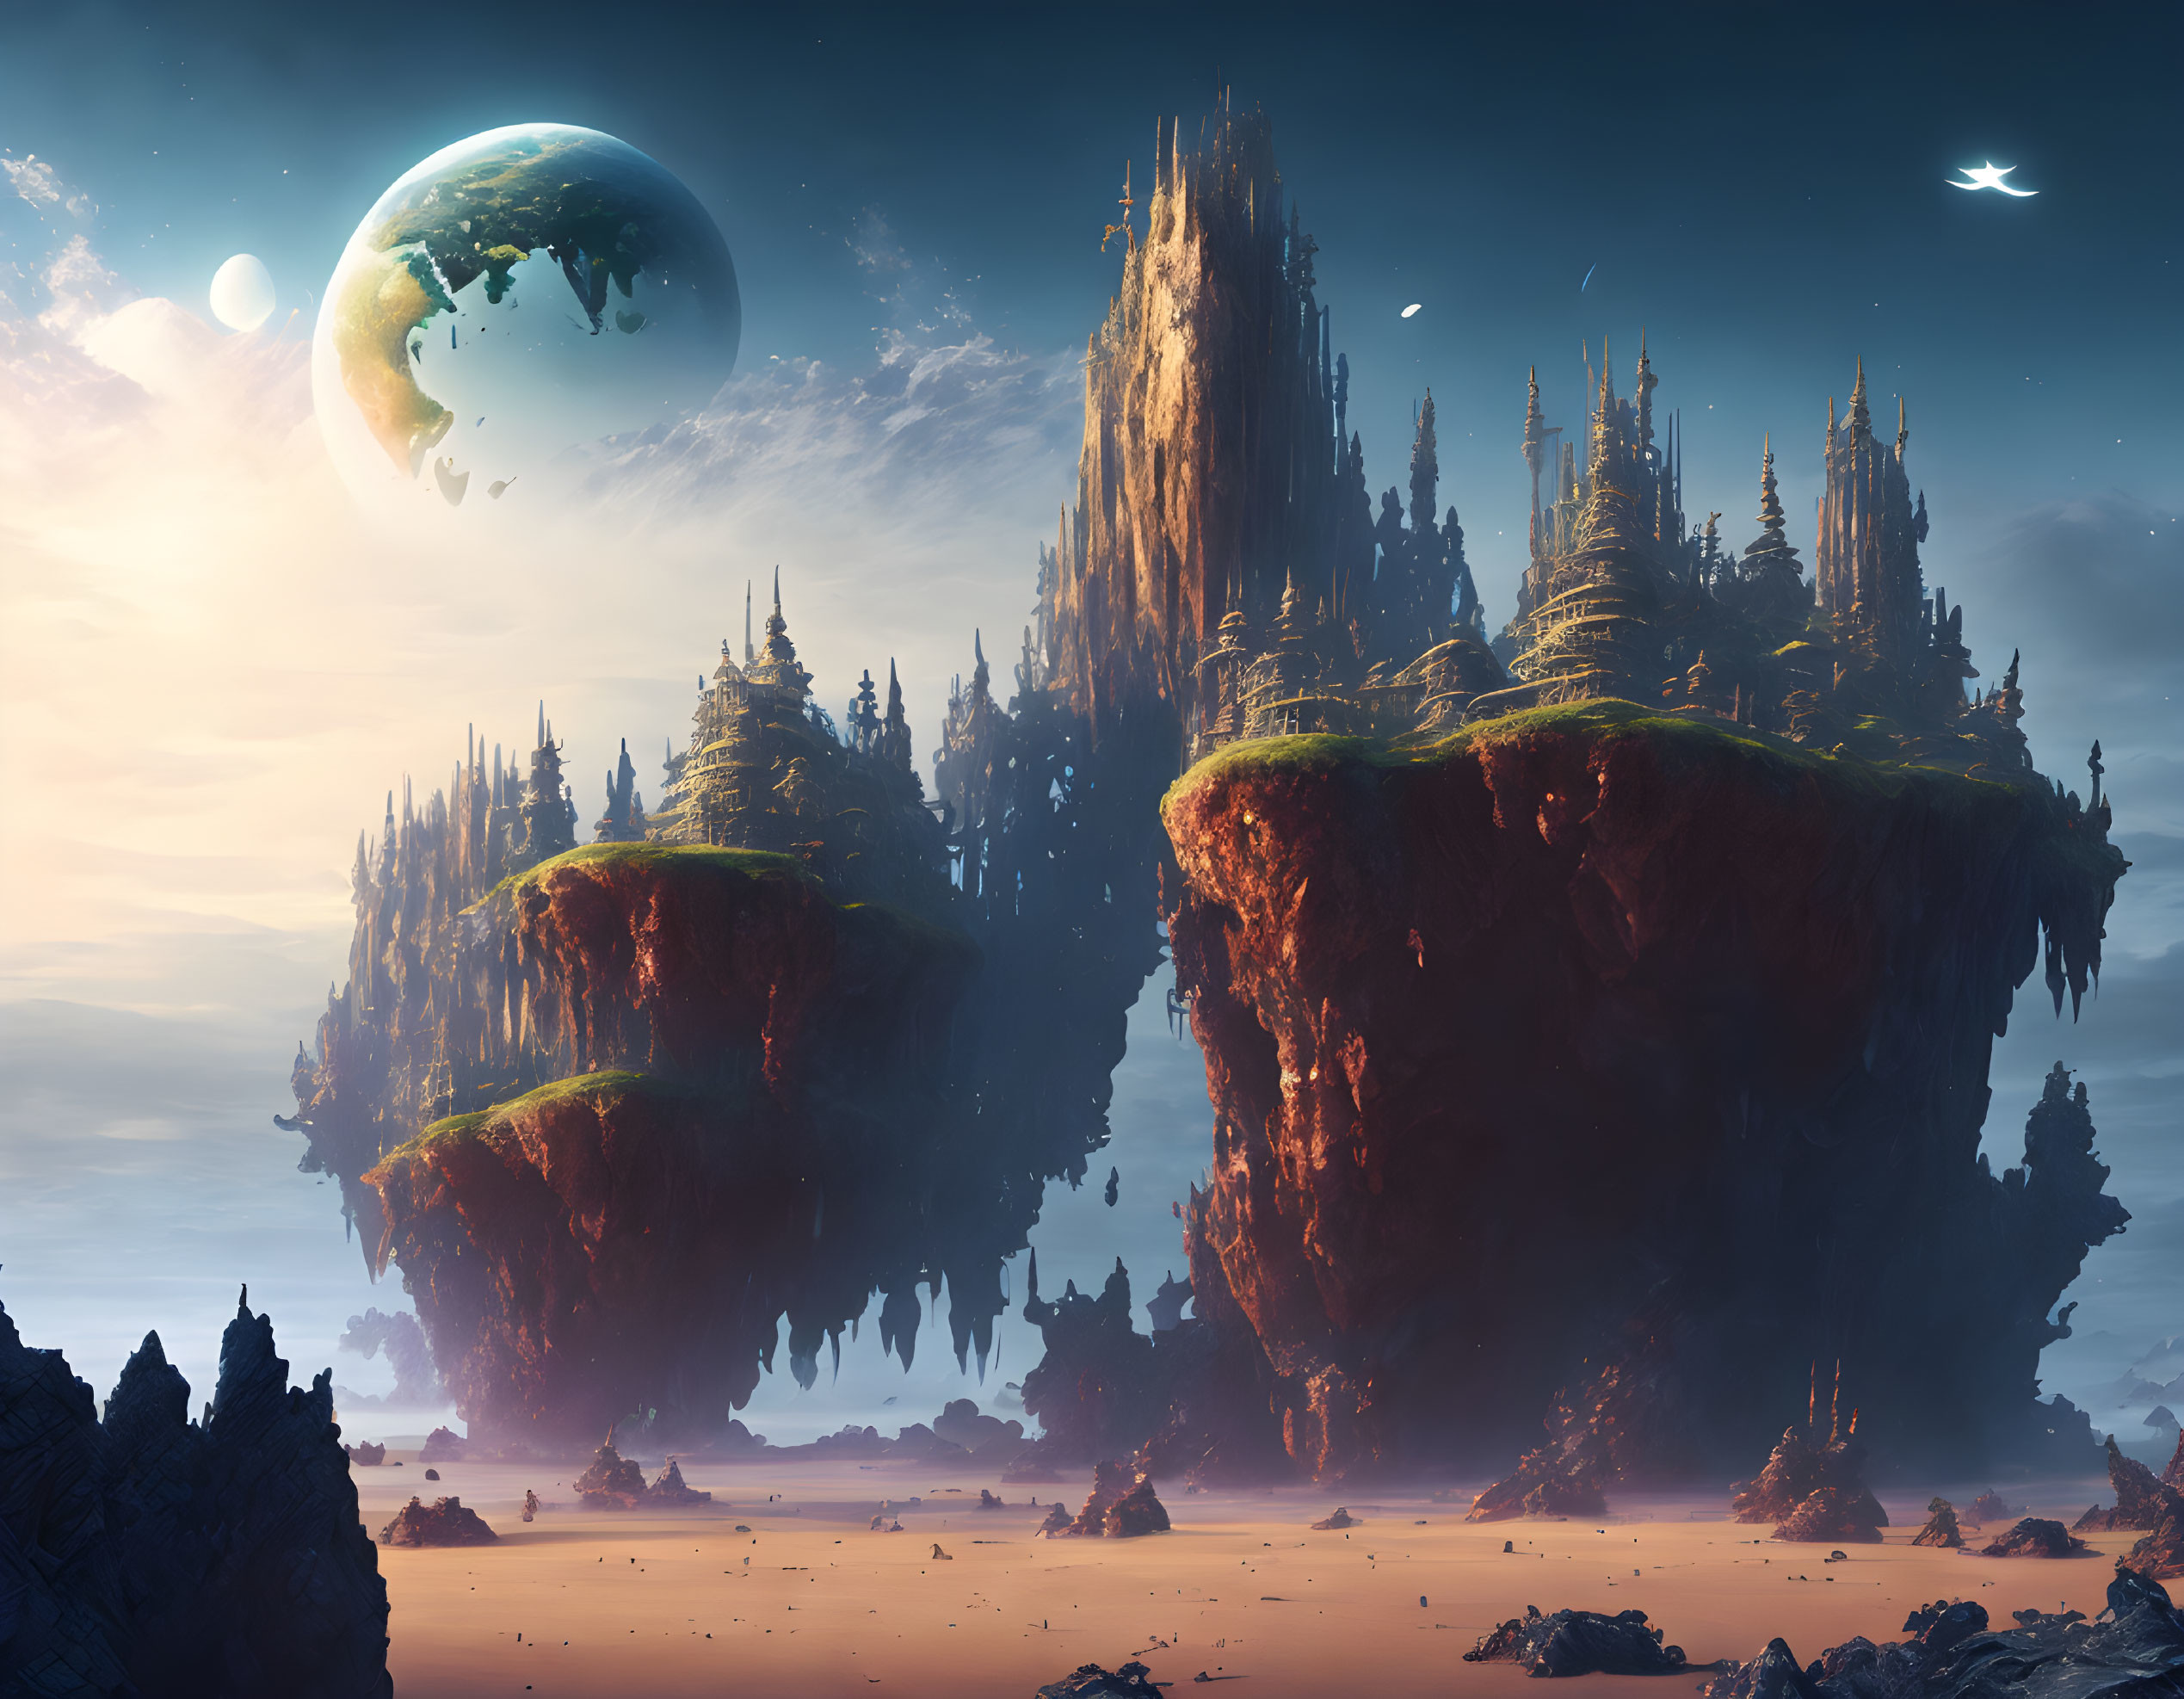 Fantastical landscape with floating islands, spires, forests, planet, and starship